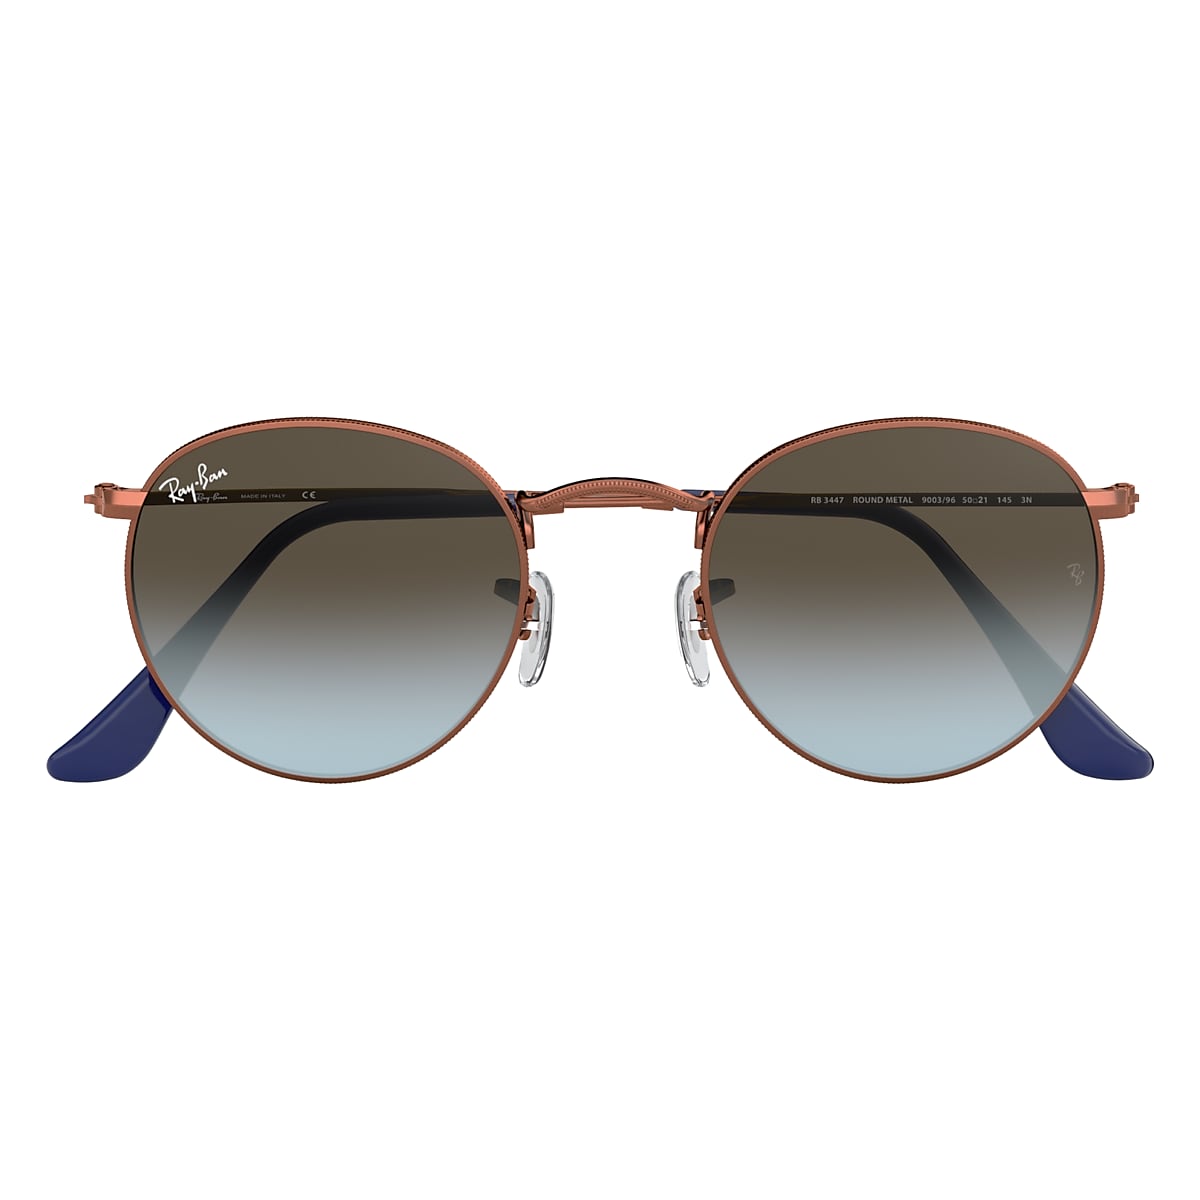 vrijdag Sneeuwstorm inkt Round Metal Sunglasses in Bronze-Copper and Blue/Brown | Ray-Ban®